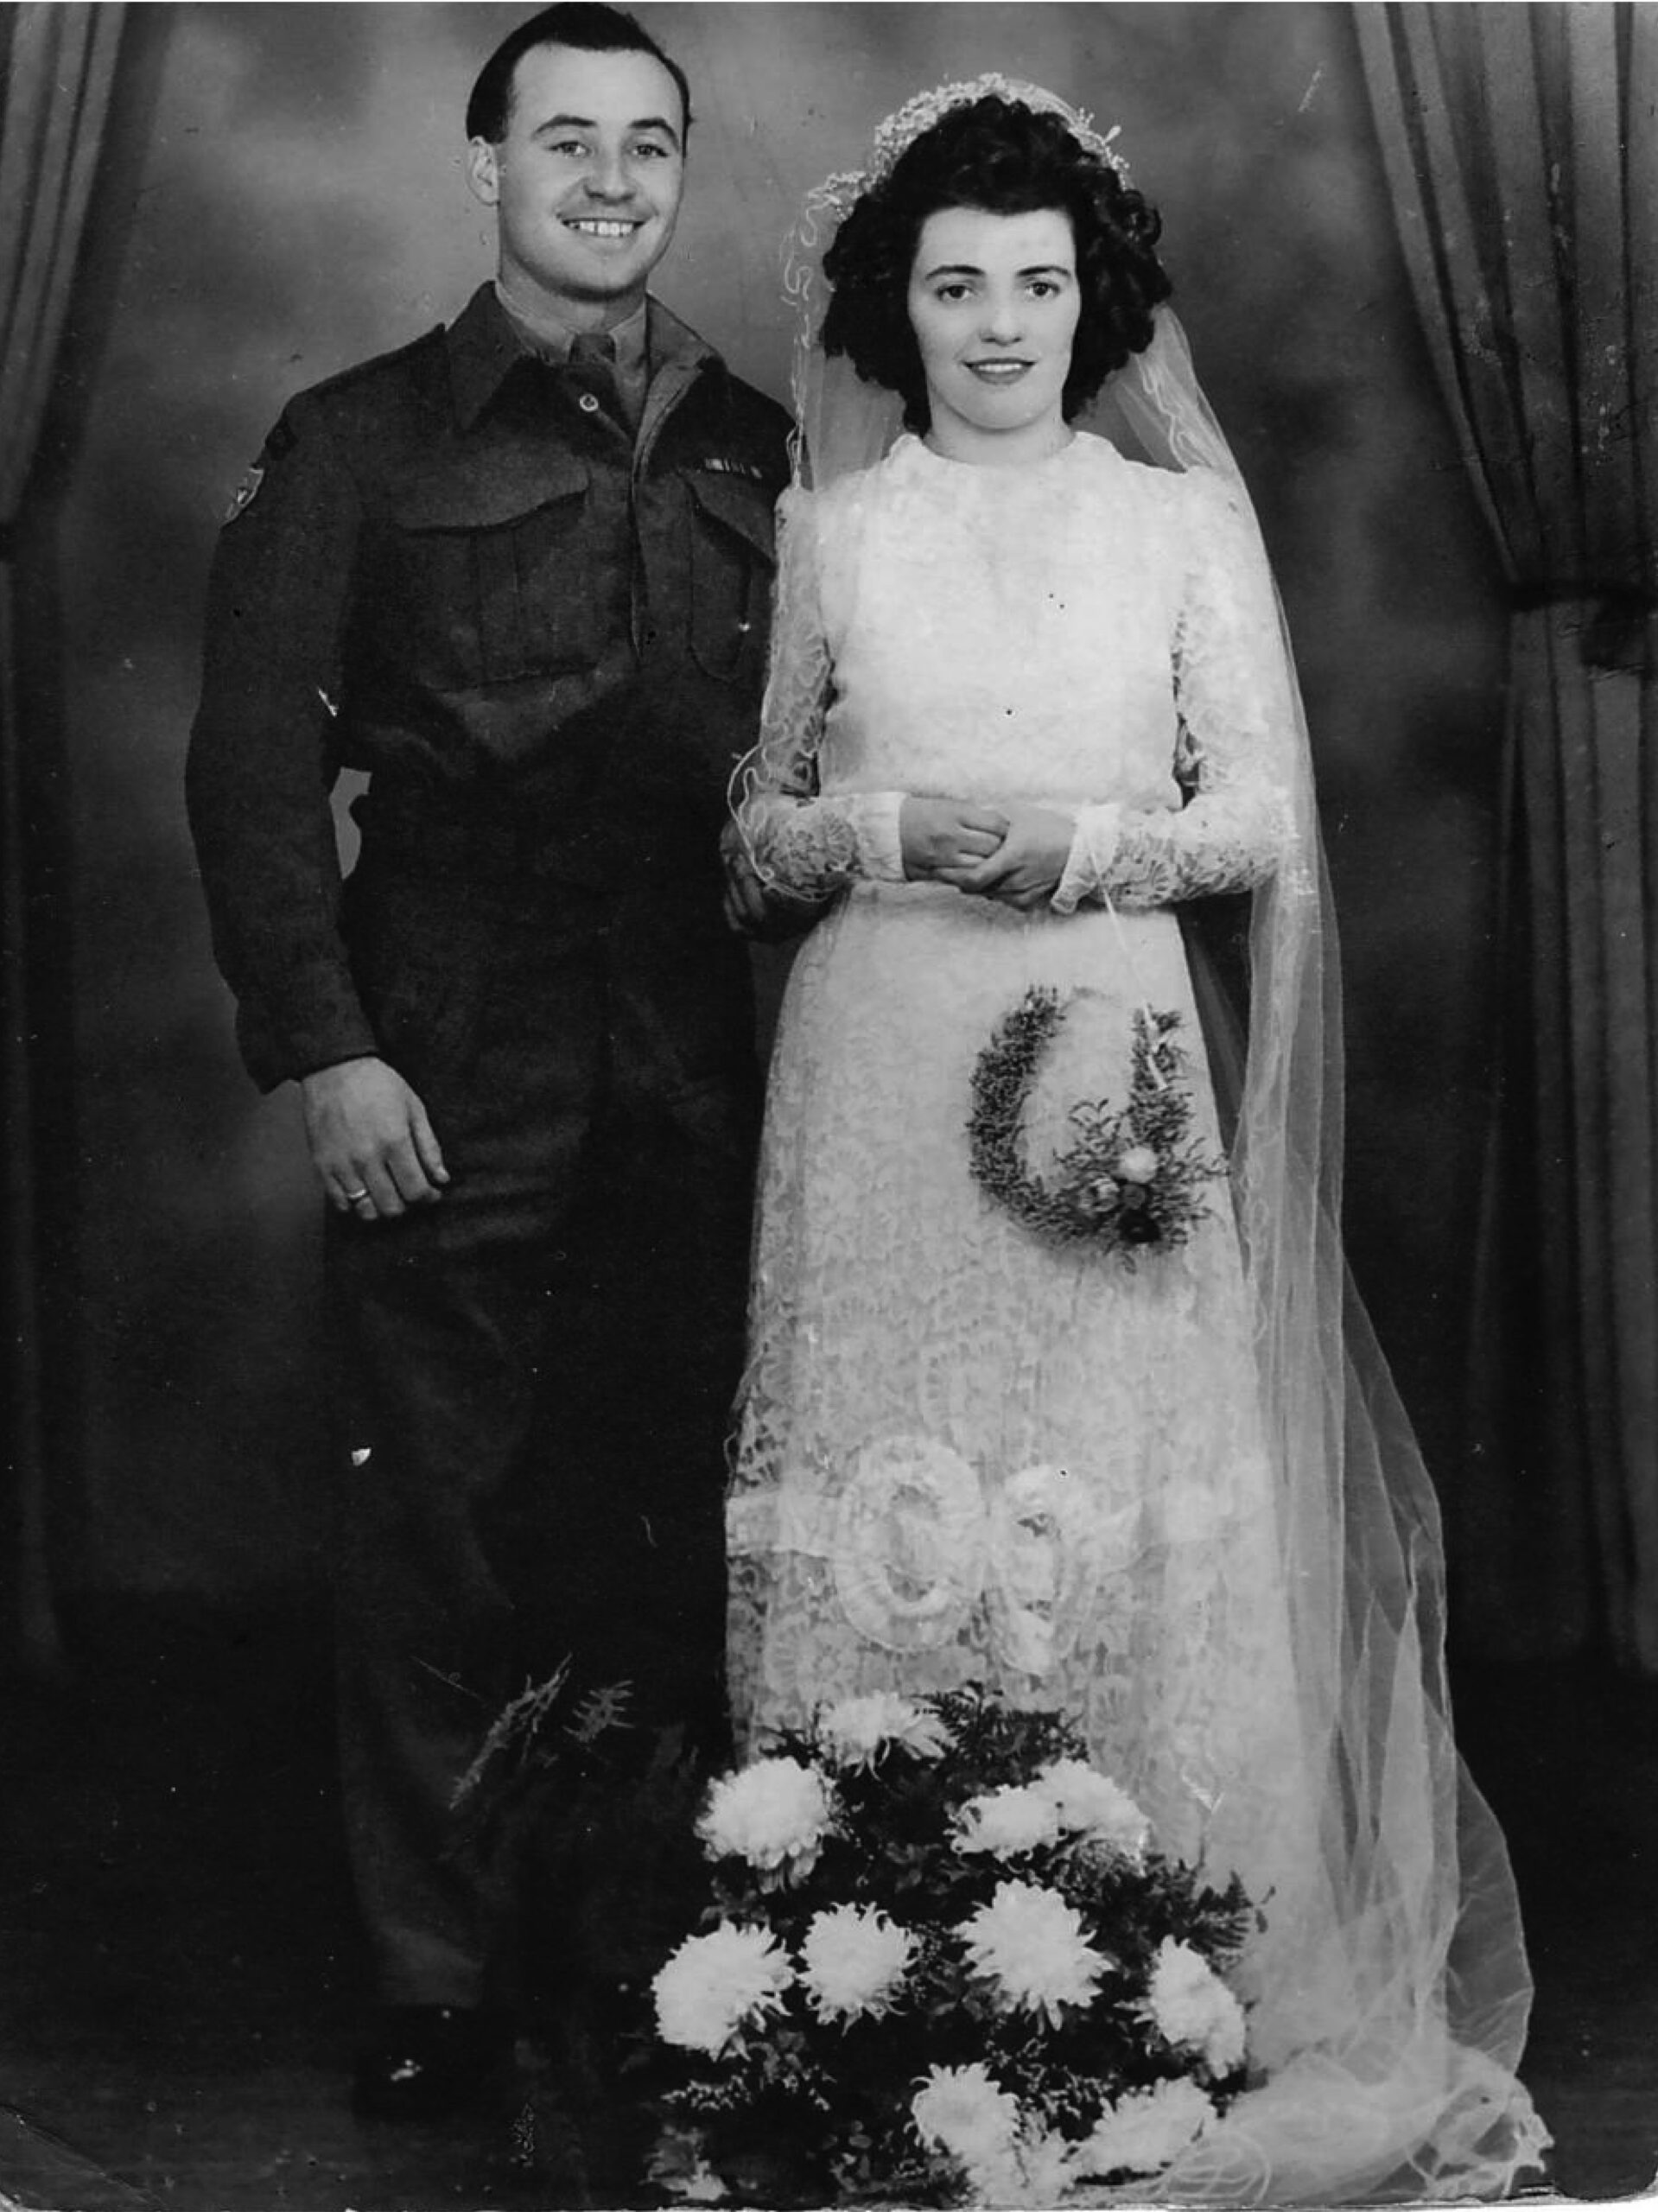 War Hero Thomas Jones and his Wife on their wedding day